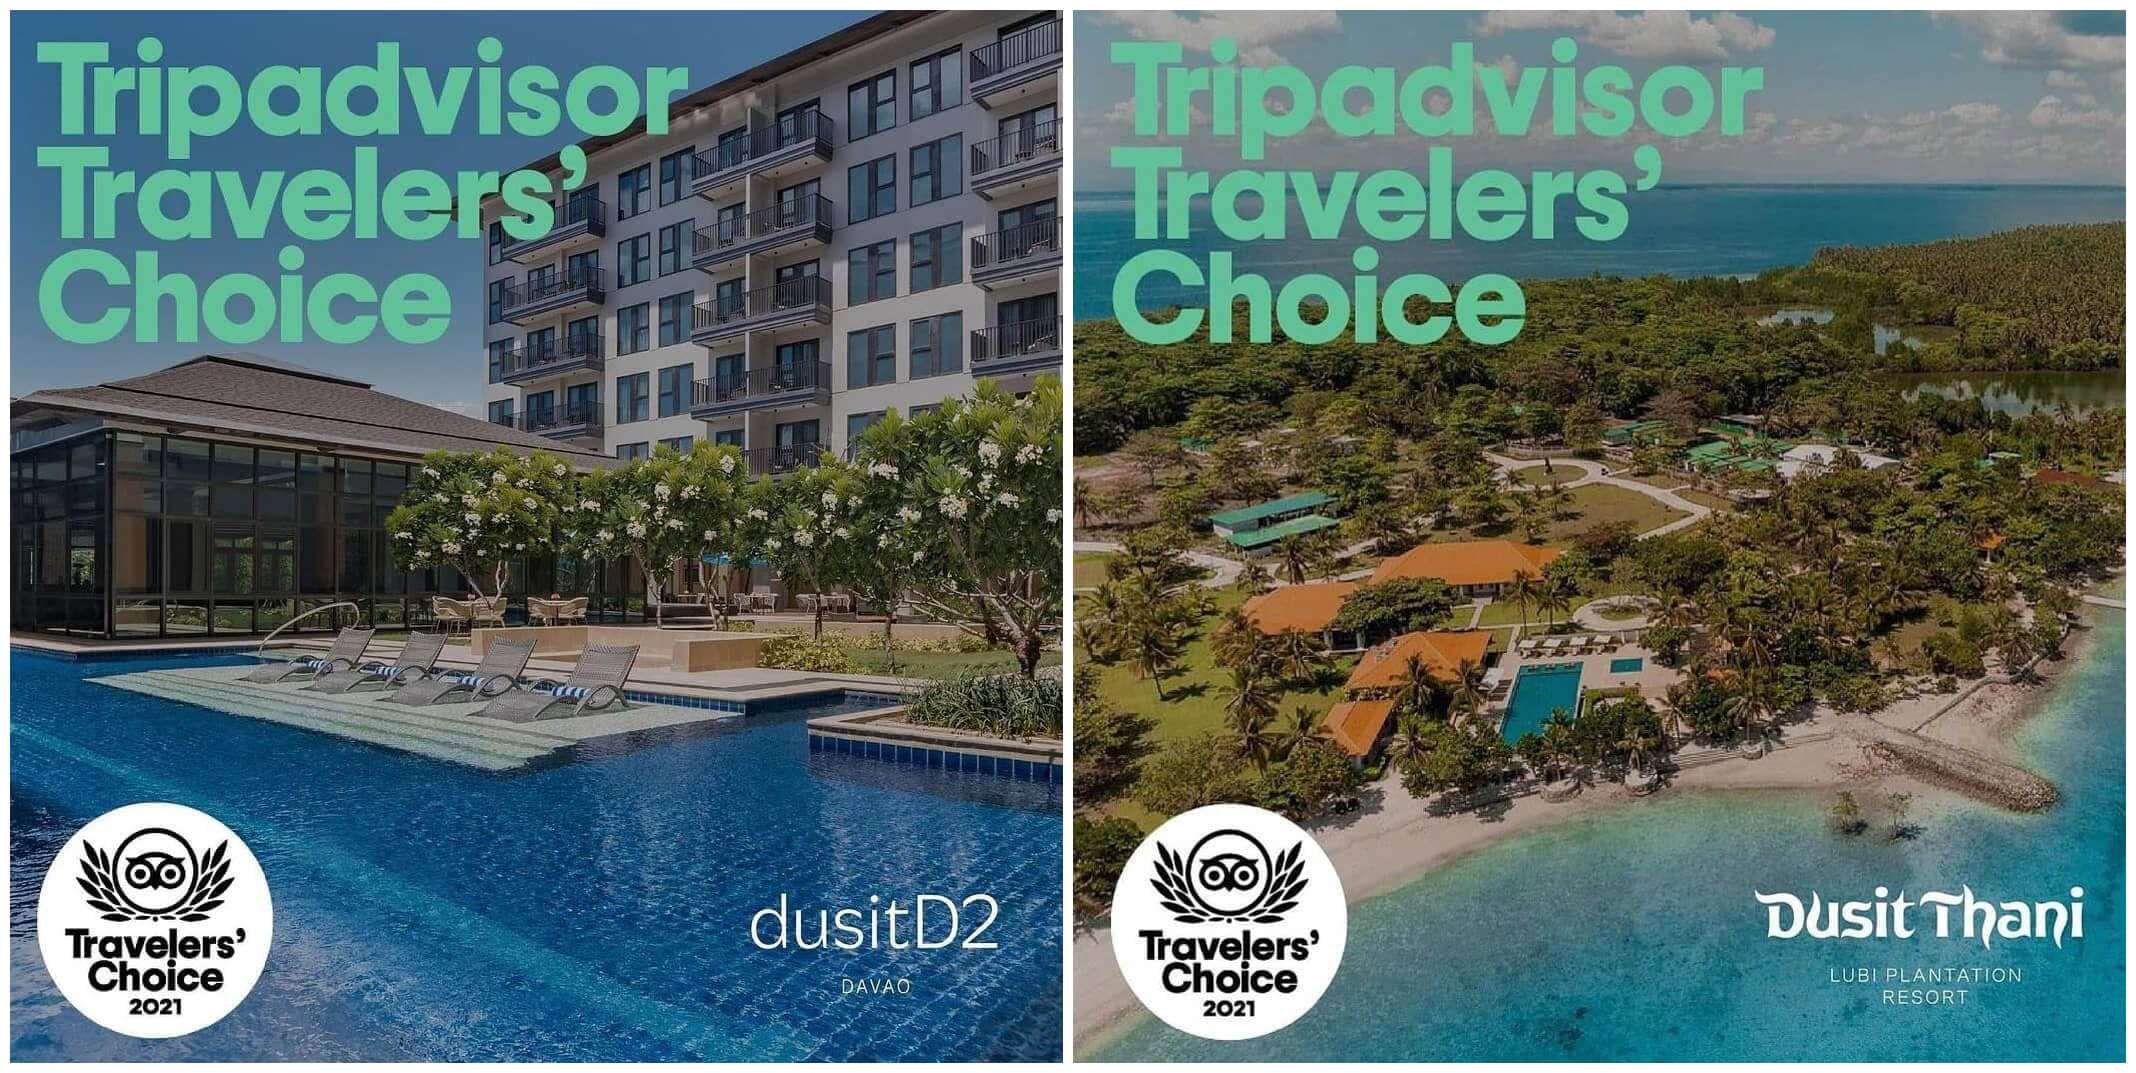 Tripadvisor Travelers' Choice Awards for dusitd2 Davao and Dusit Thani Lubi Plantation Resort